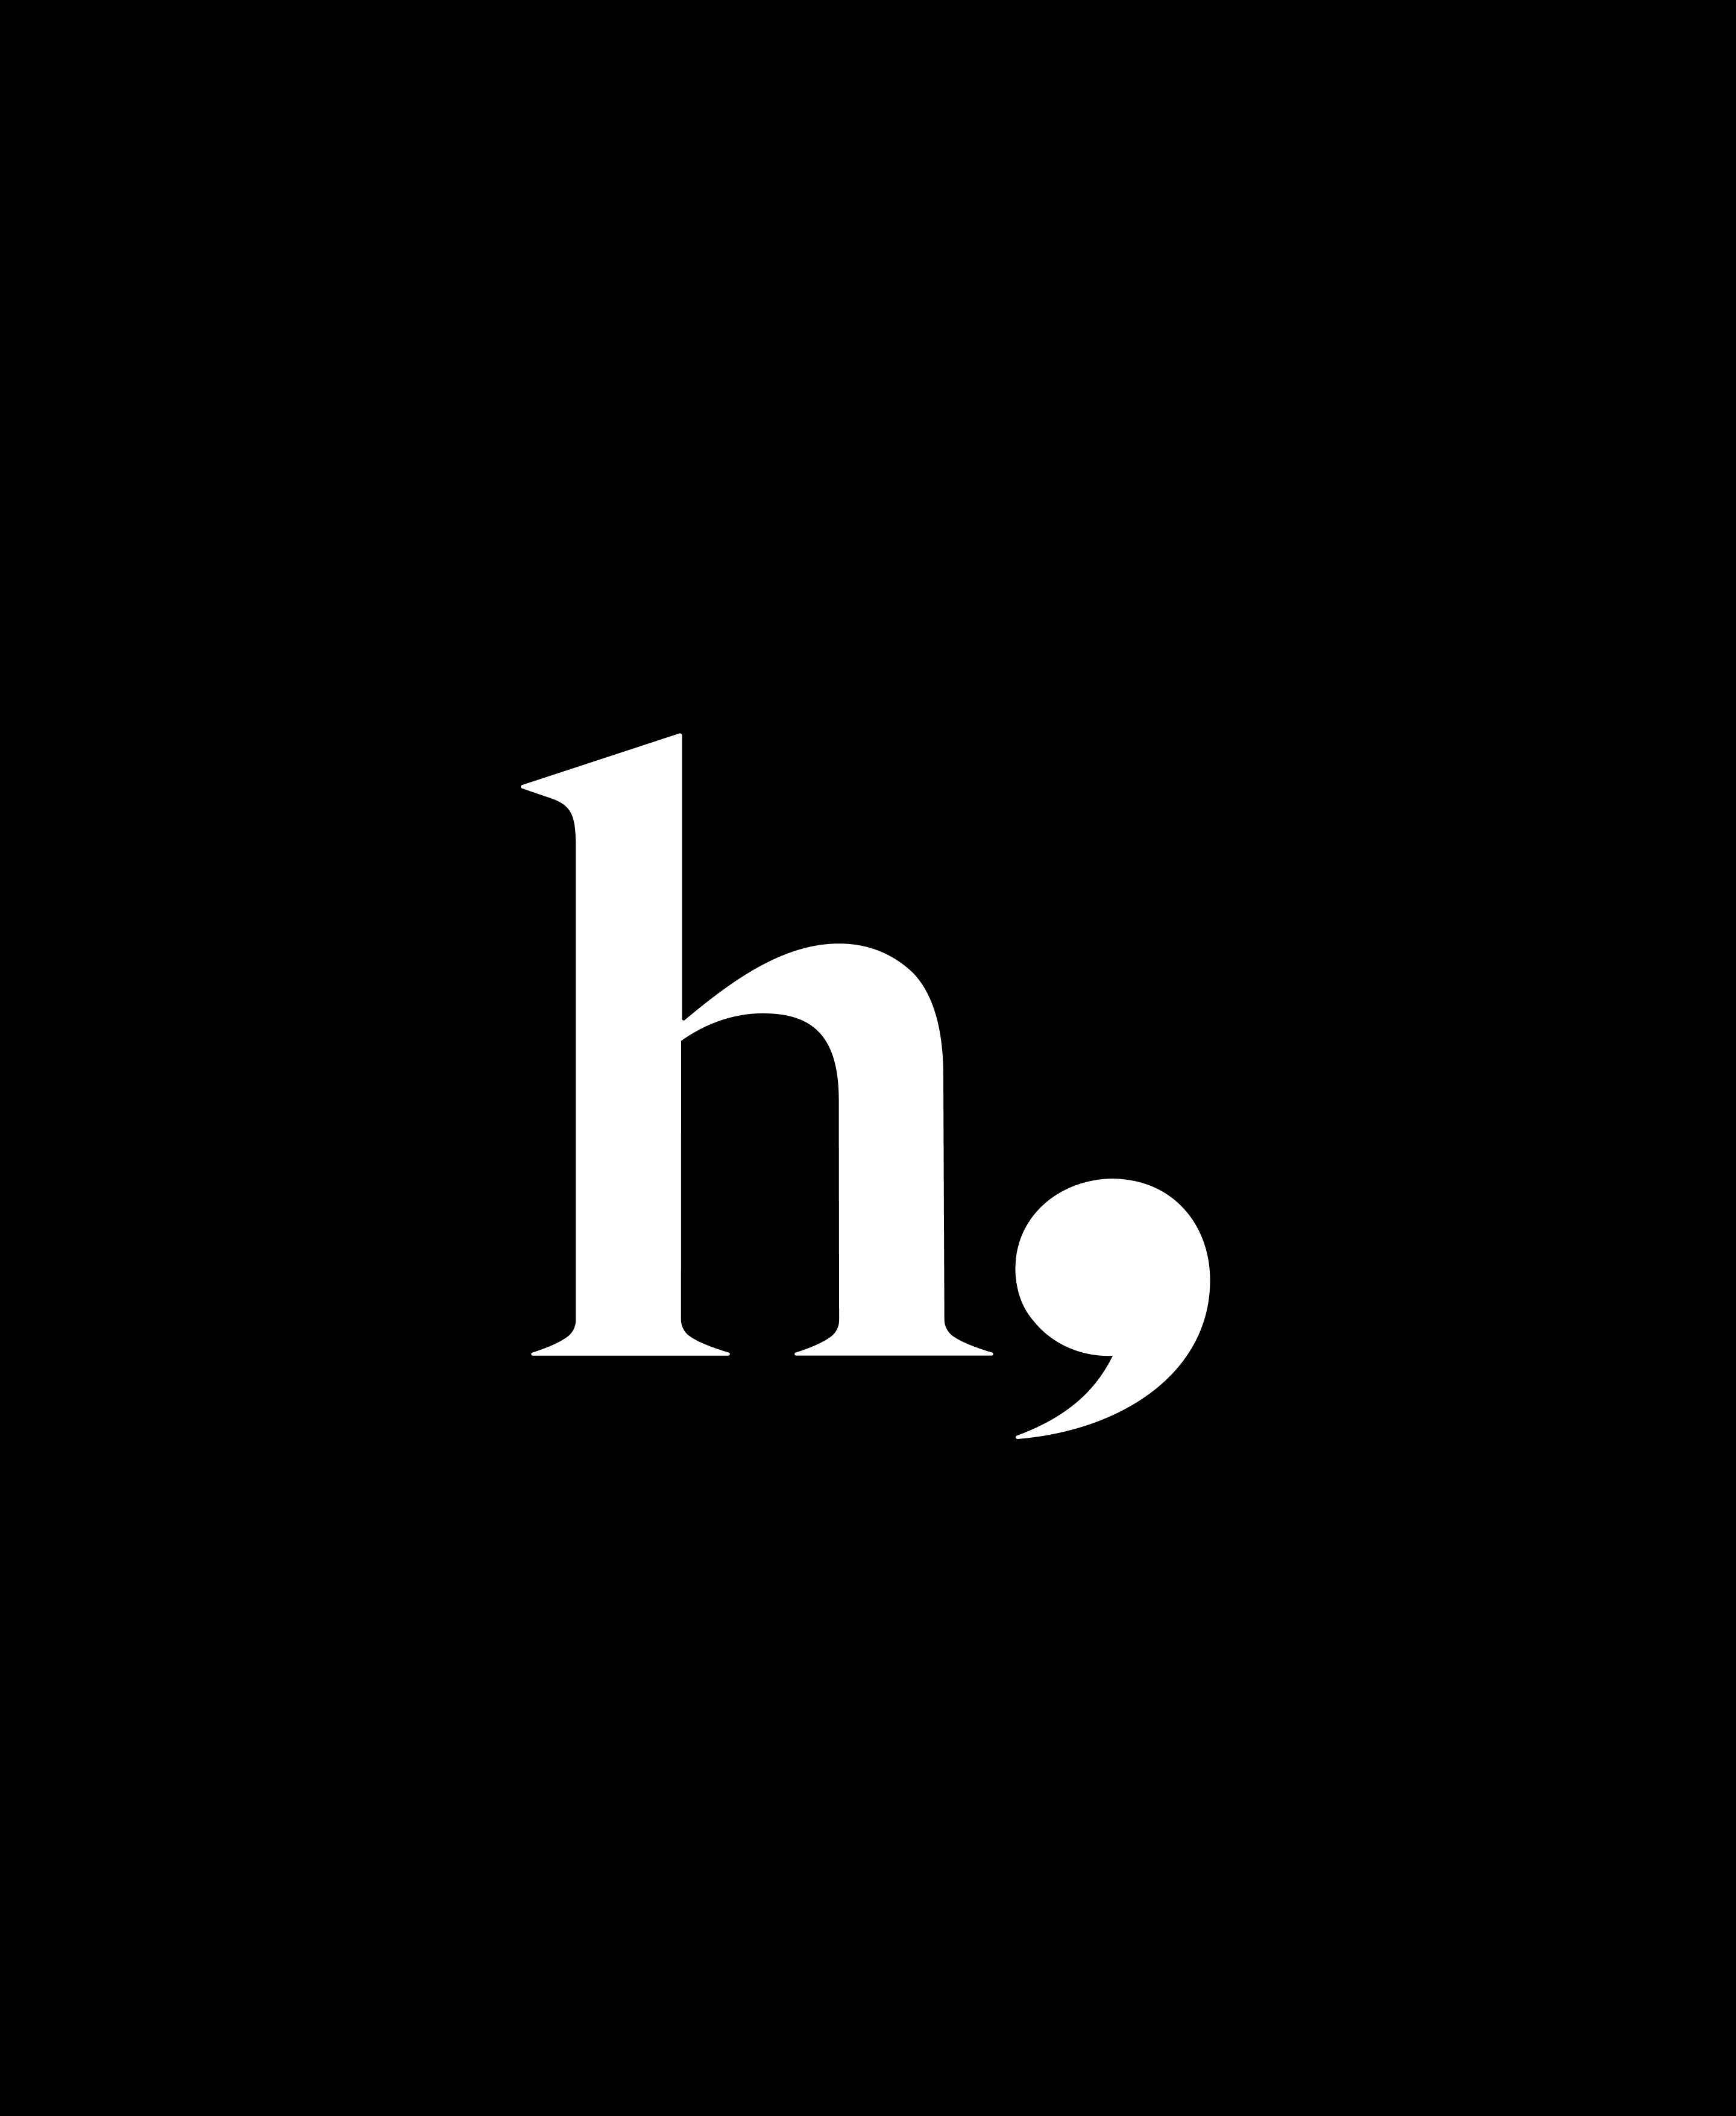 hnine's logo in black background